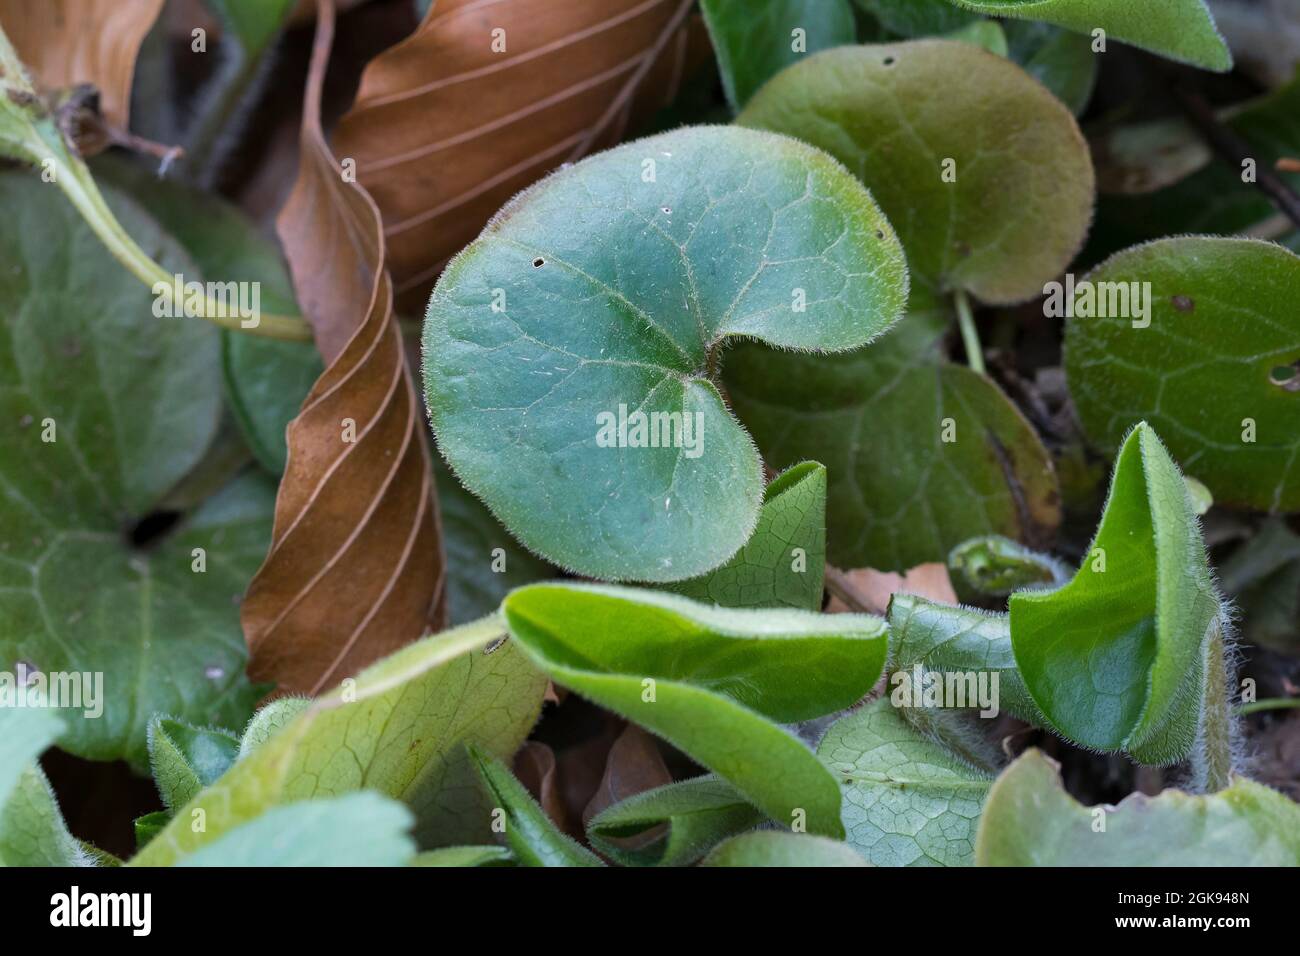 Asarabacca (Asarum europaeum), leaves, Germany Stock Photo